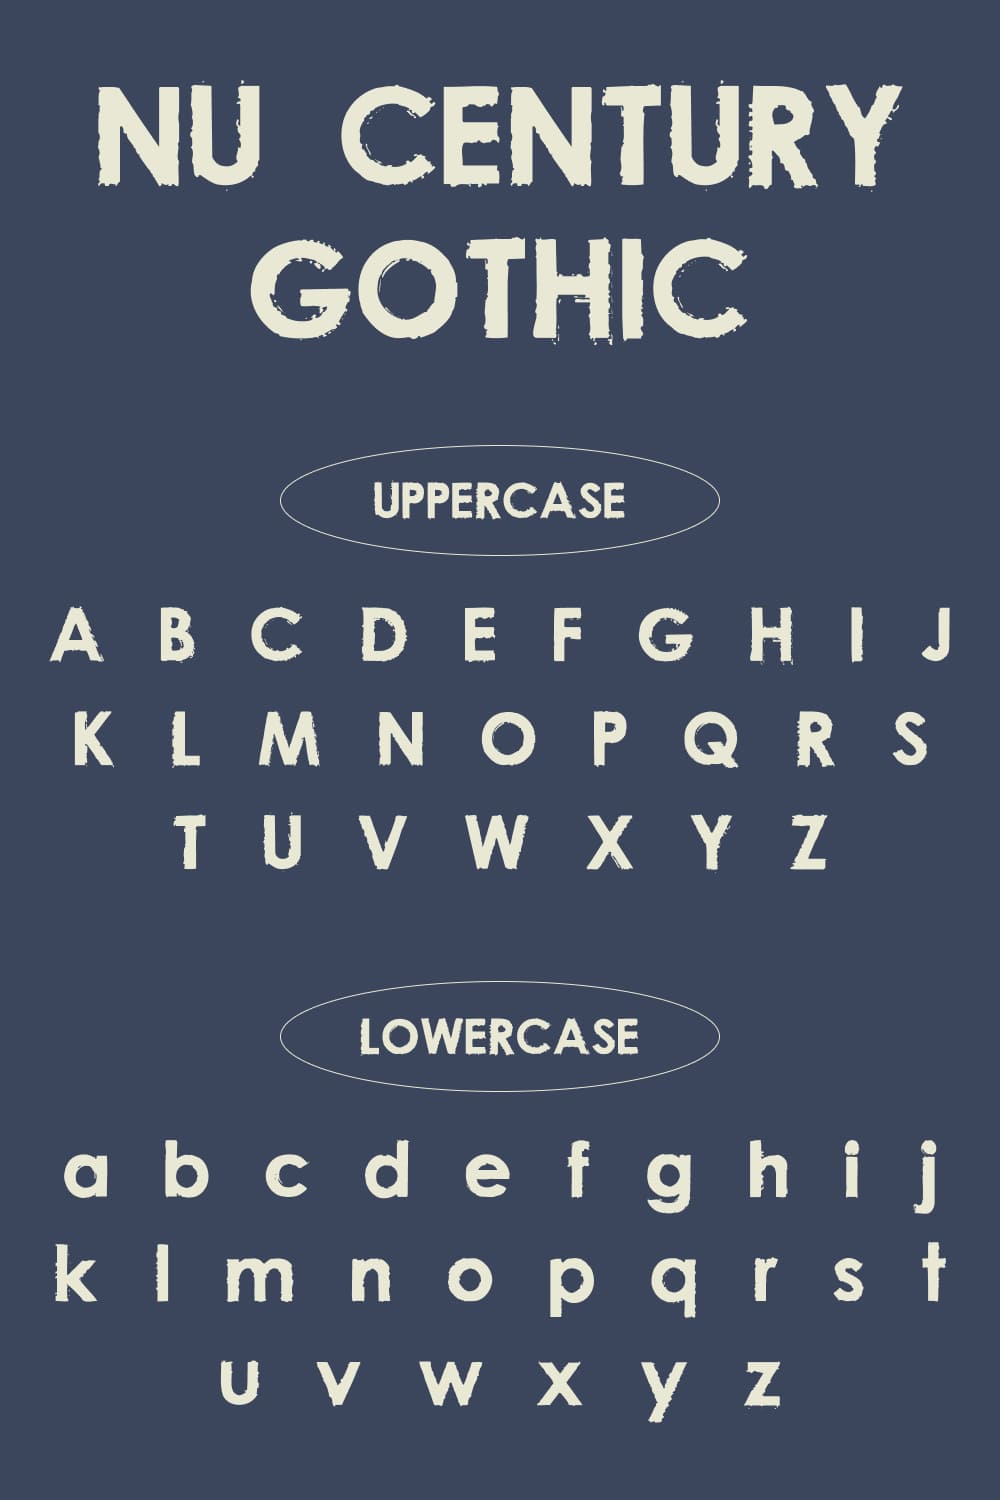 Free Century Gothic Font - Pinterest.